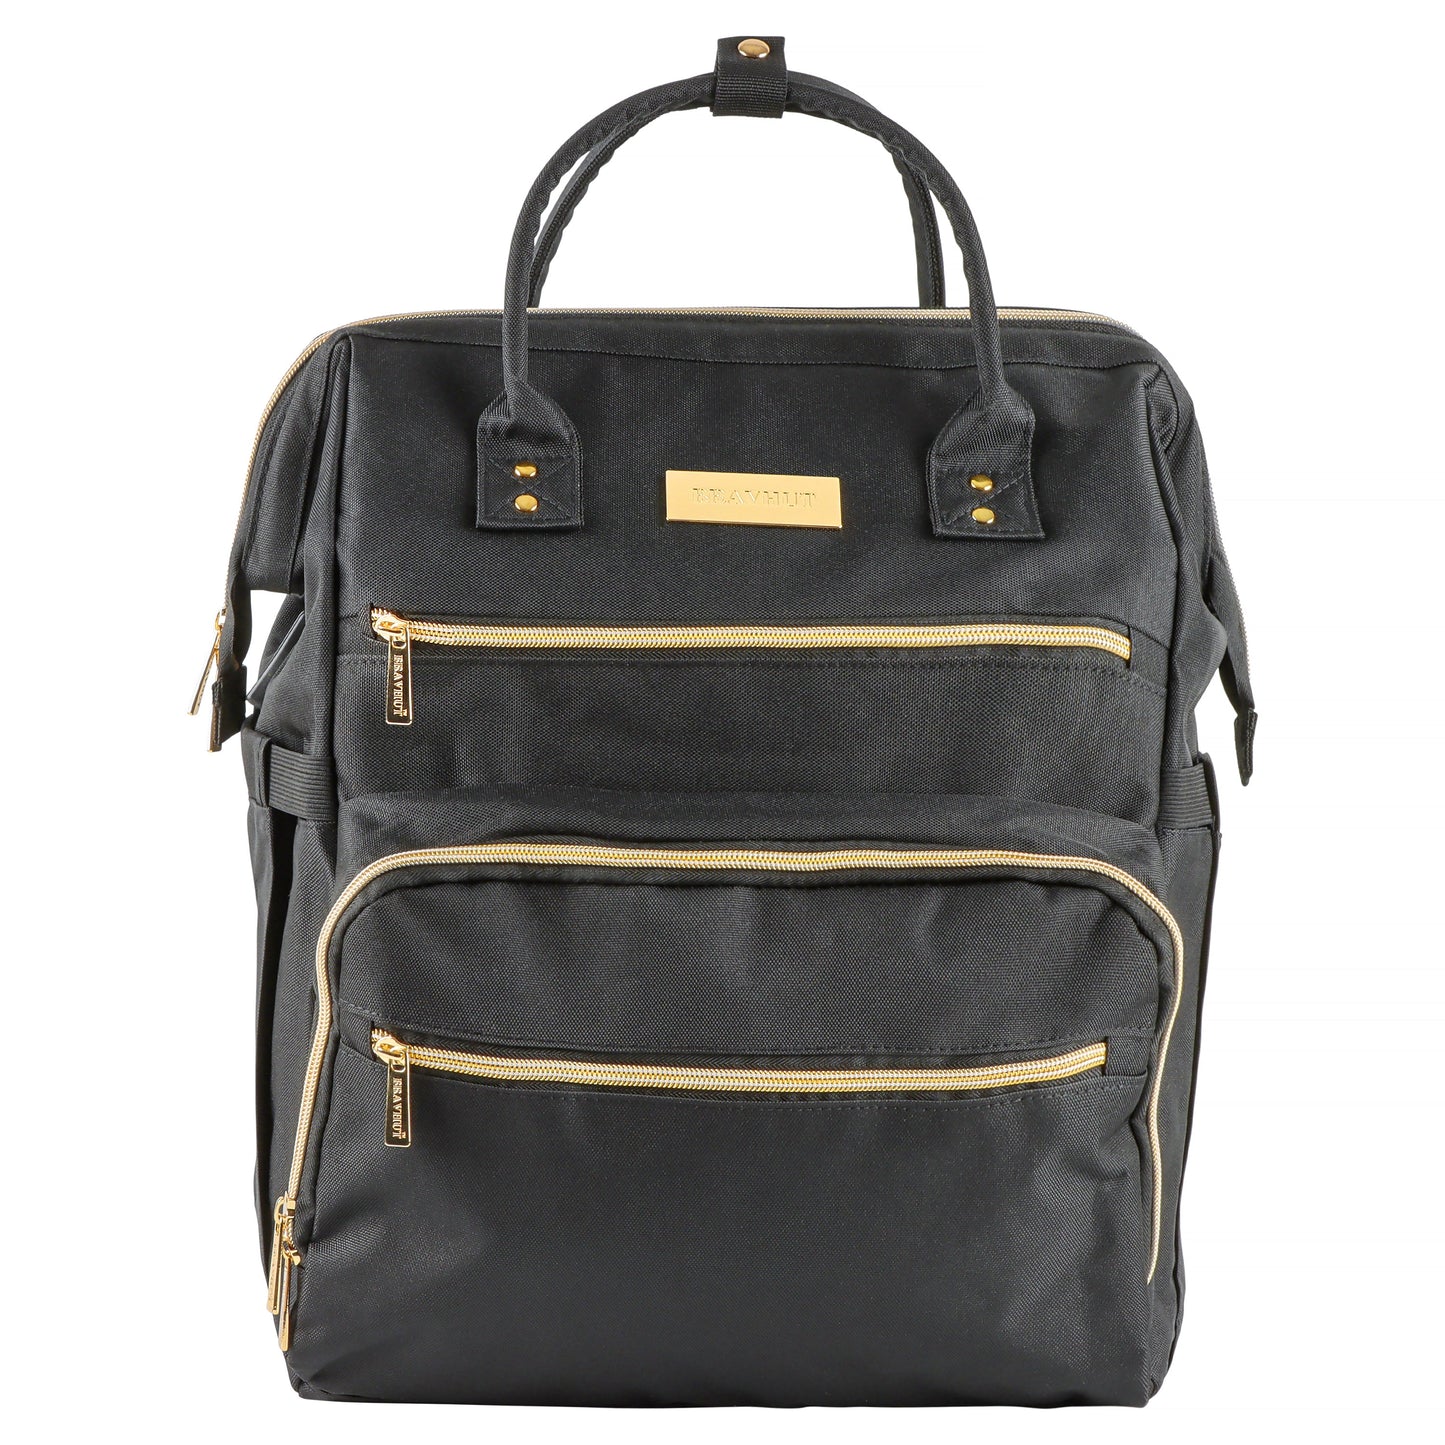 Teacher Tote Bag - Laptop Backpack For Educators, Preschool, high school, college Professor